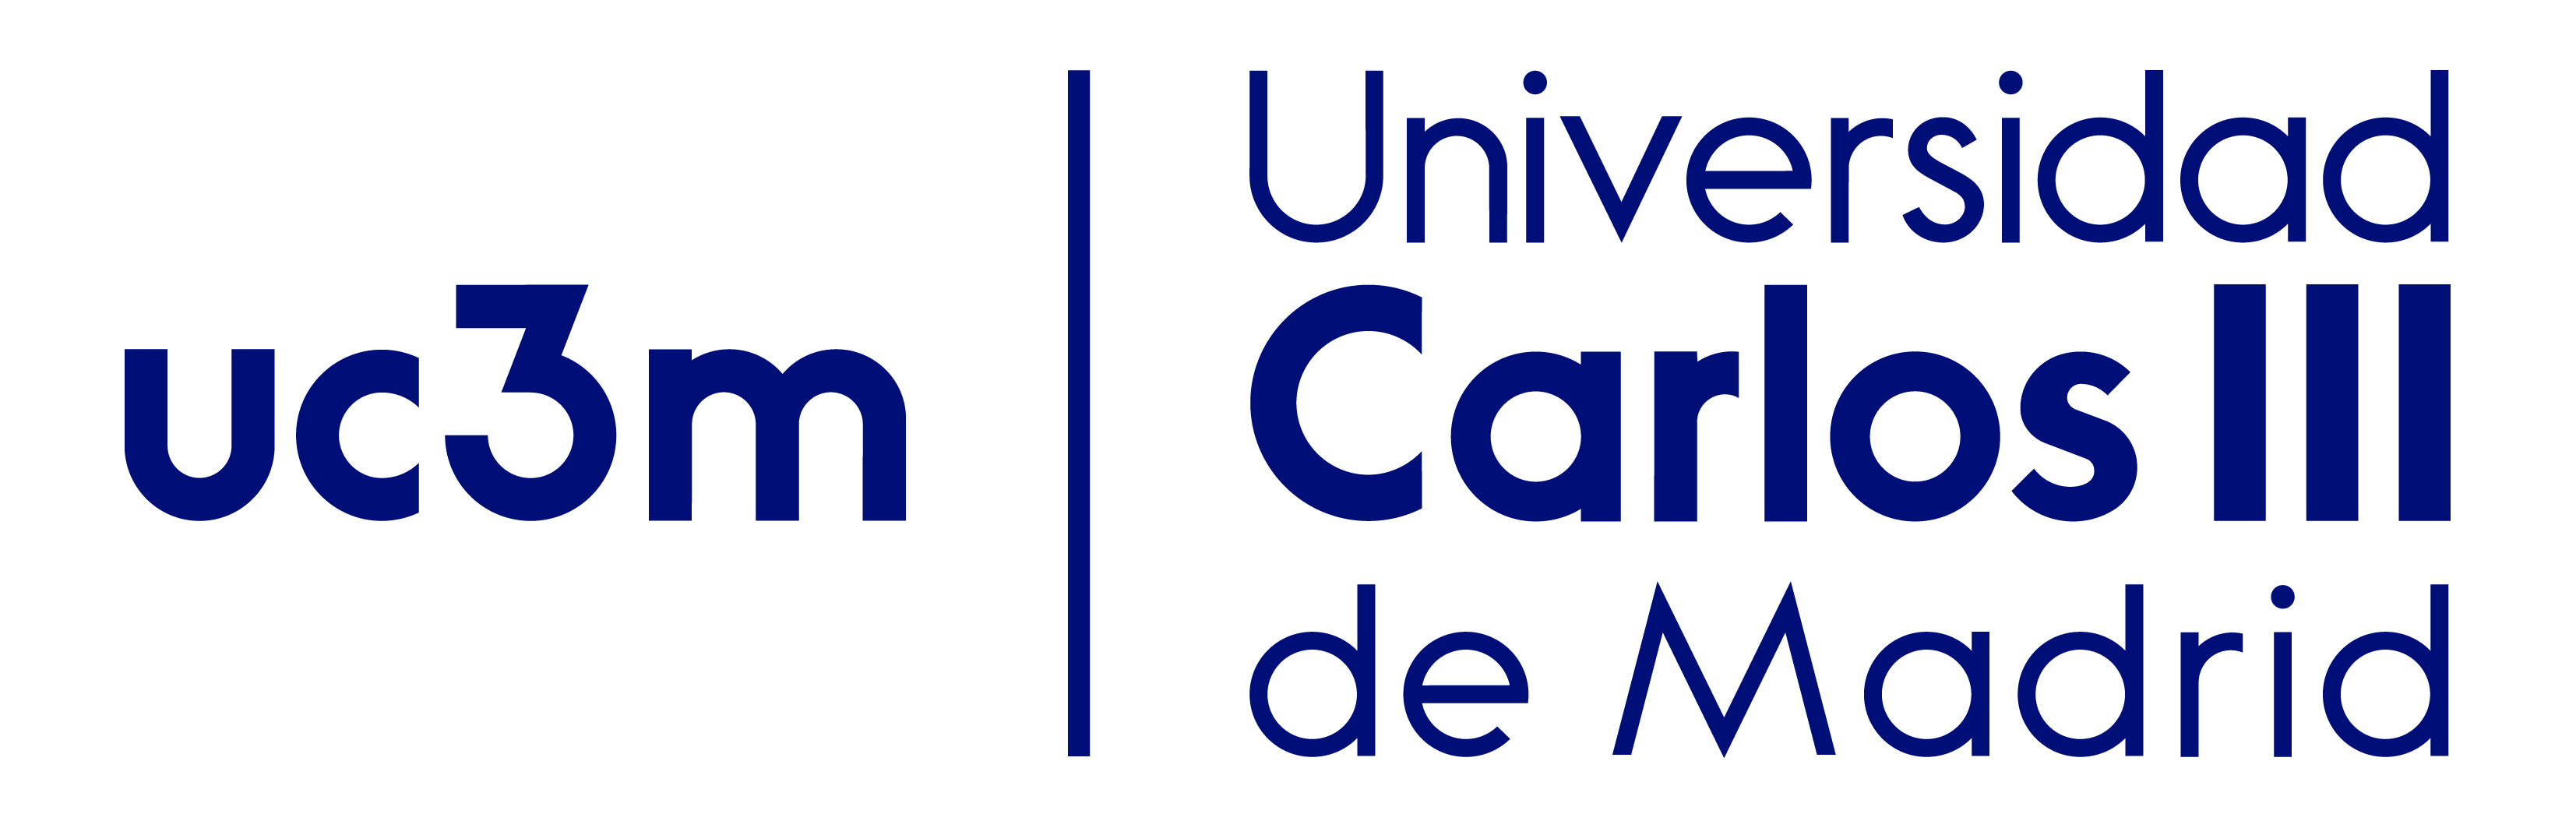 University Carlos III of Madrid